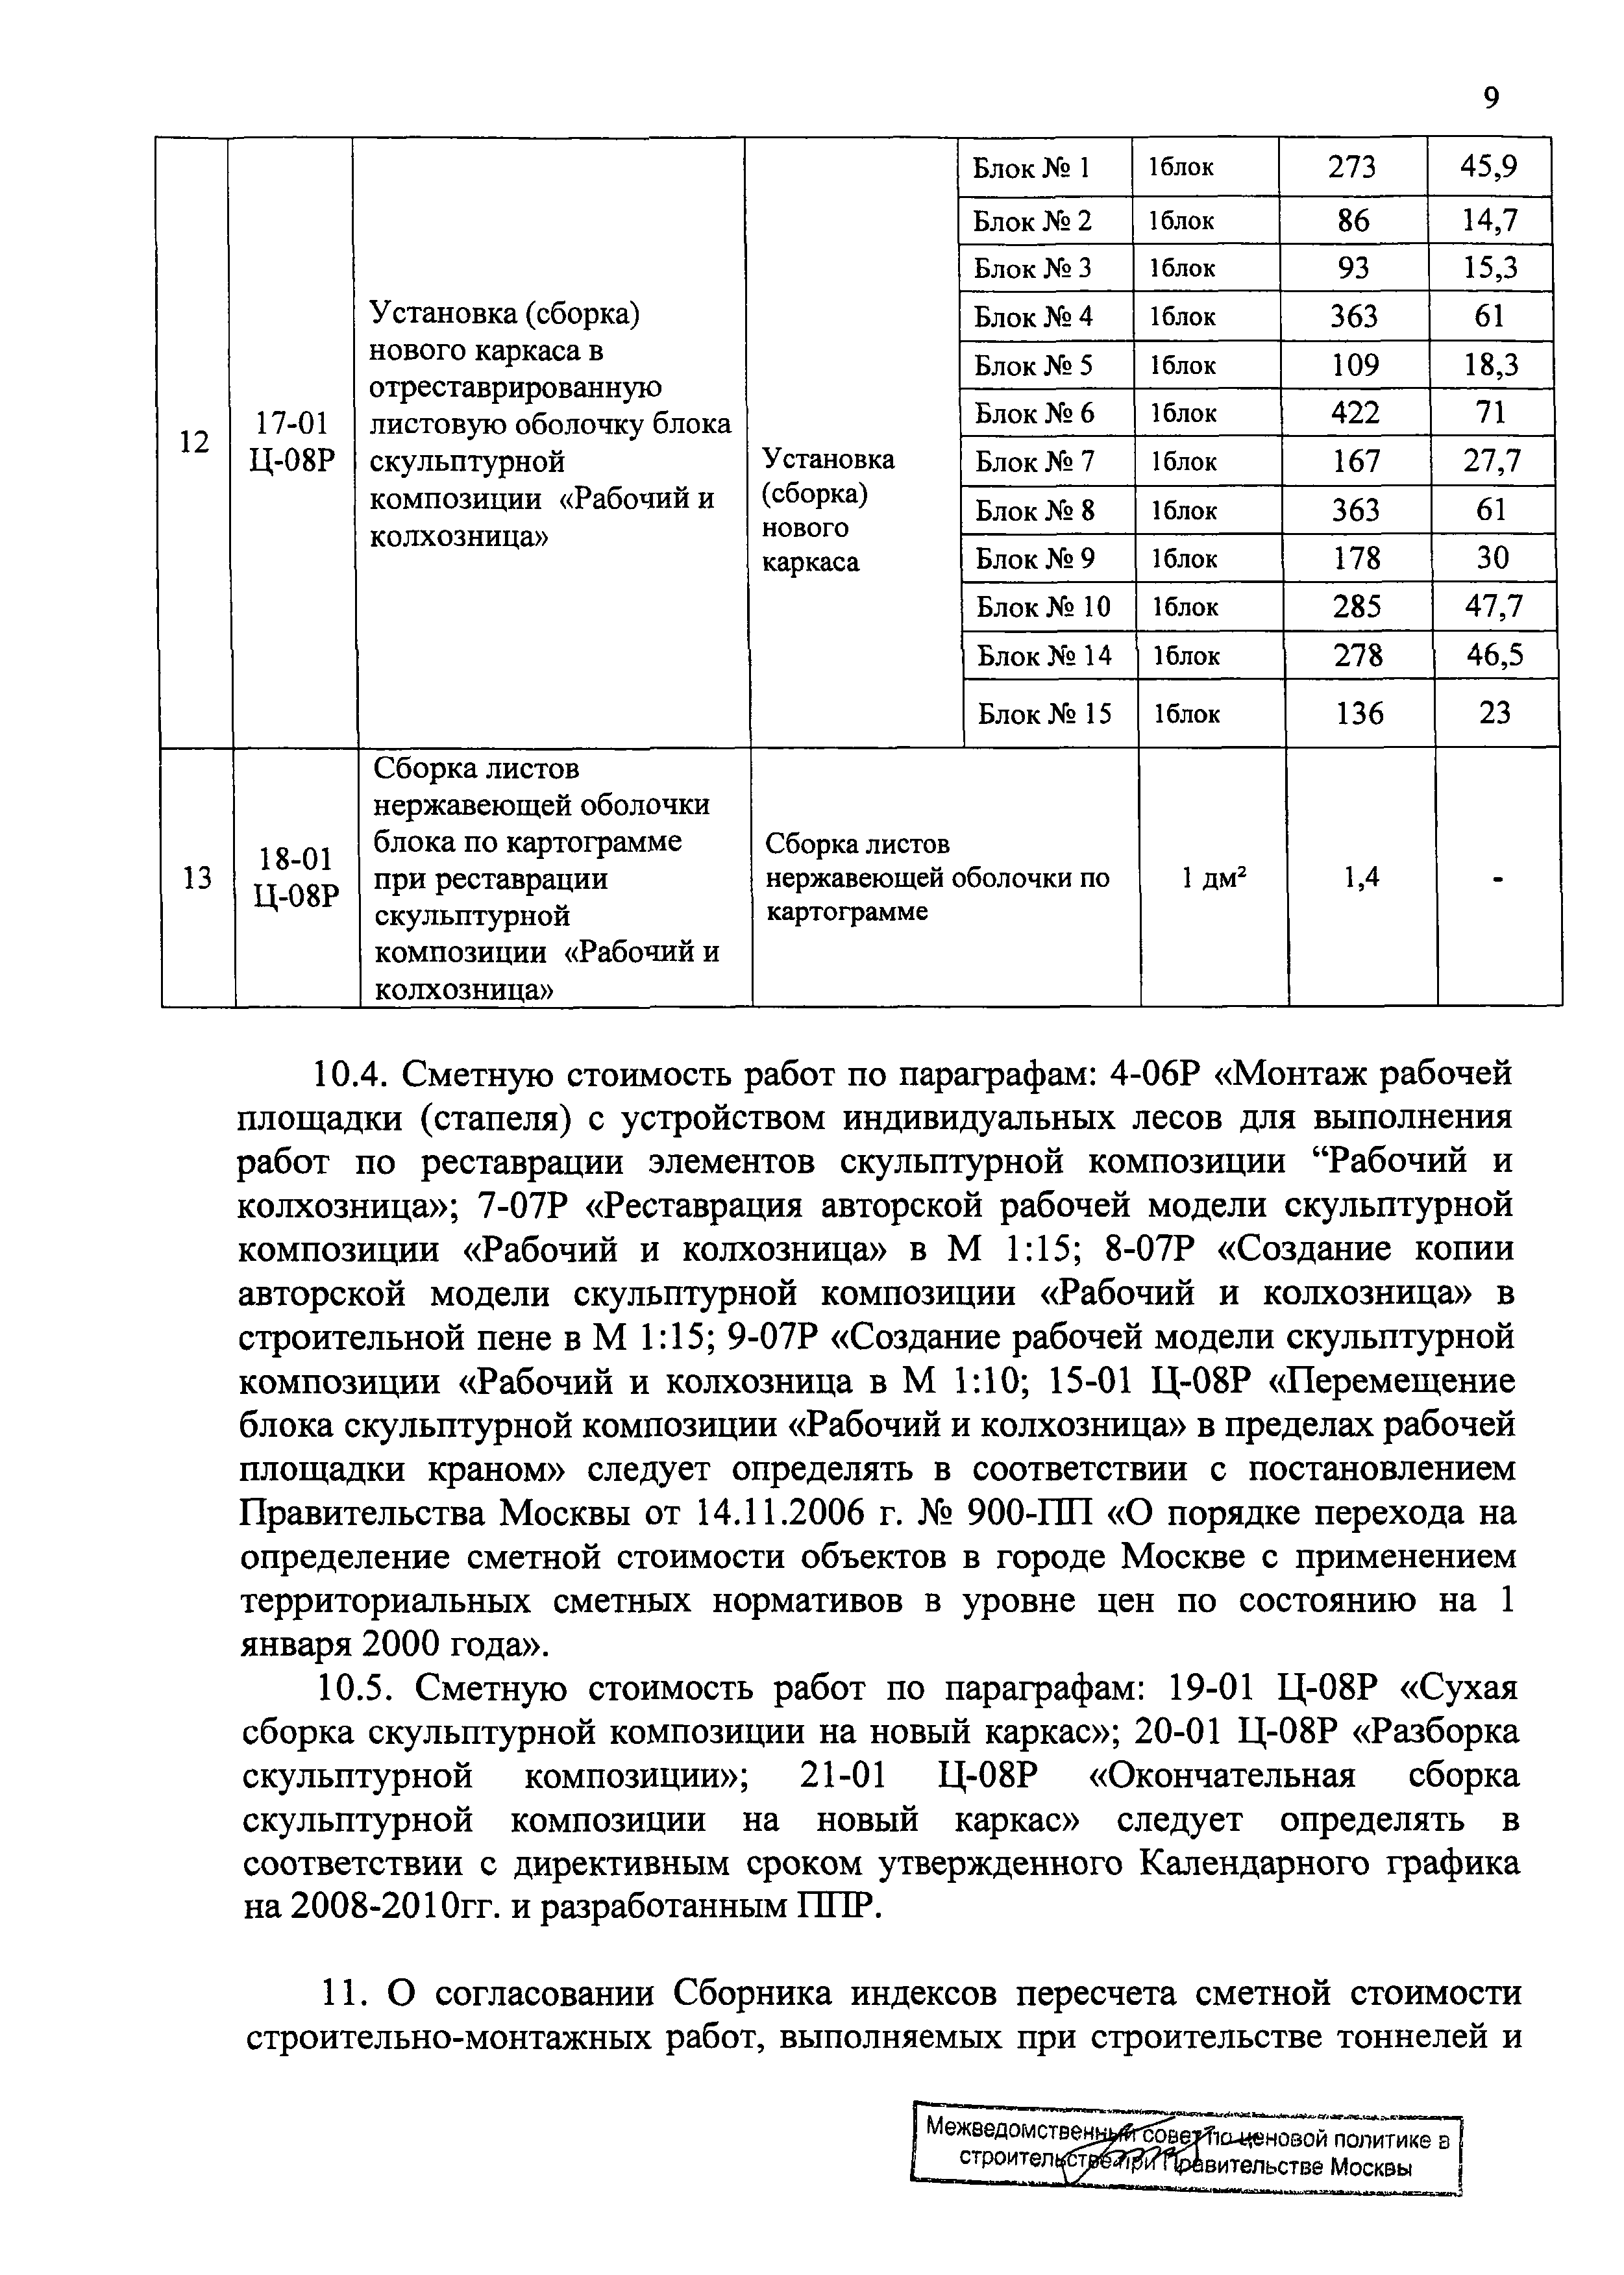 Протокол МВС-10-08